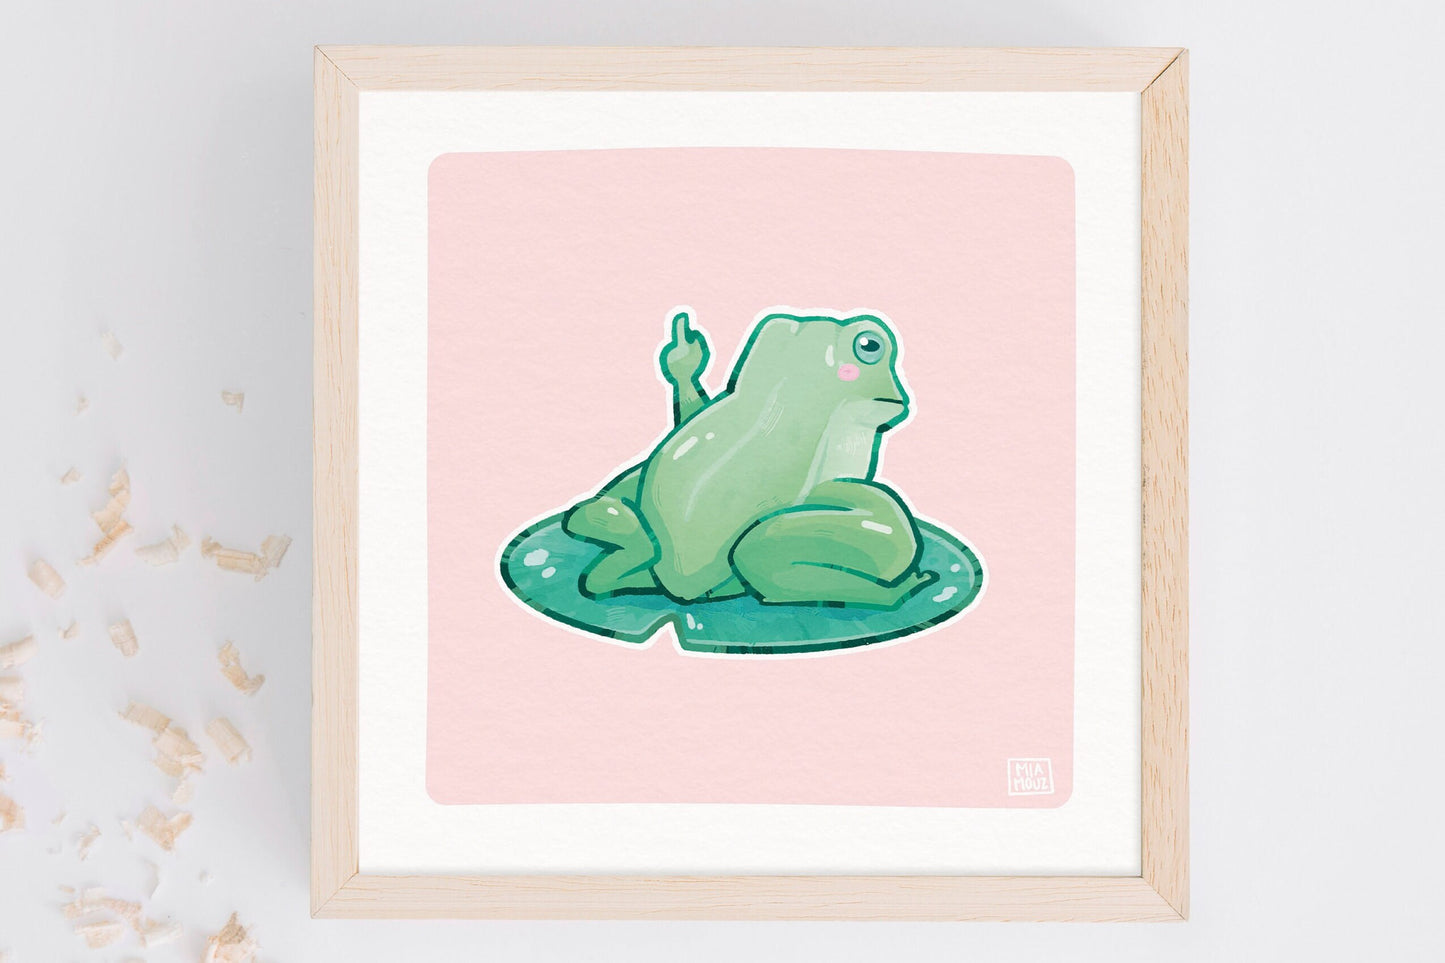 Frog Off 15x15 Artprint | Pastel Square Art Print | Fuck You Room Art | Premium Linen Cardboard | Home Decor | Wall Art | Art by Miamouz